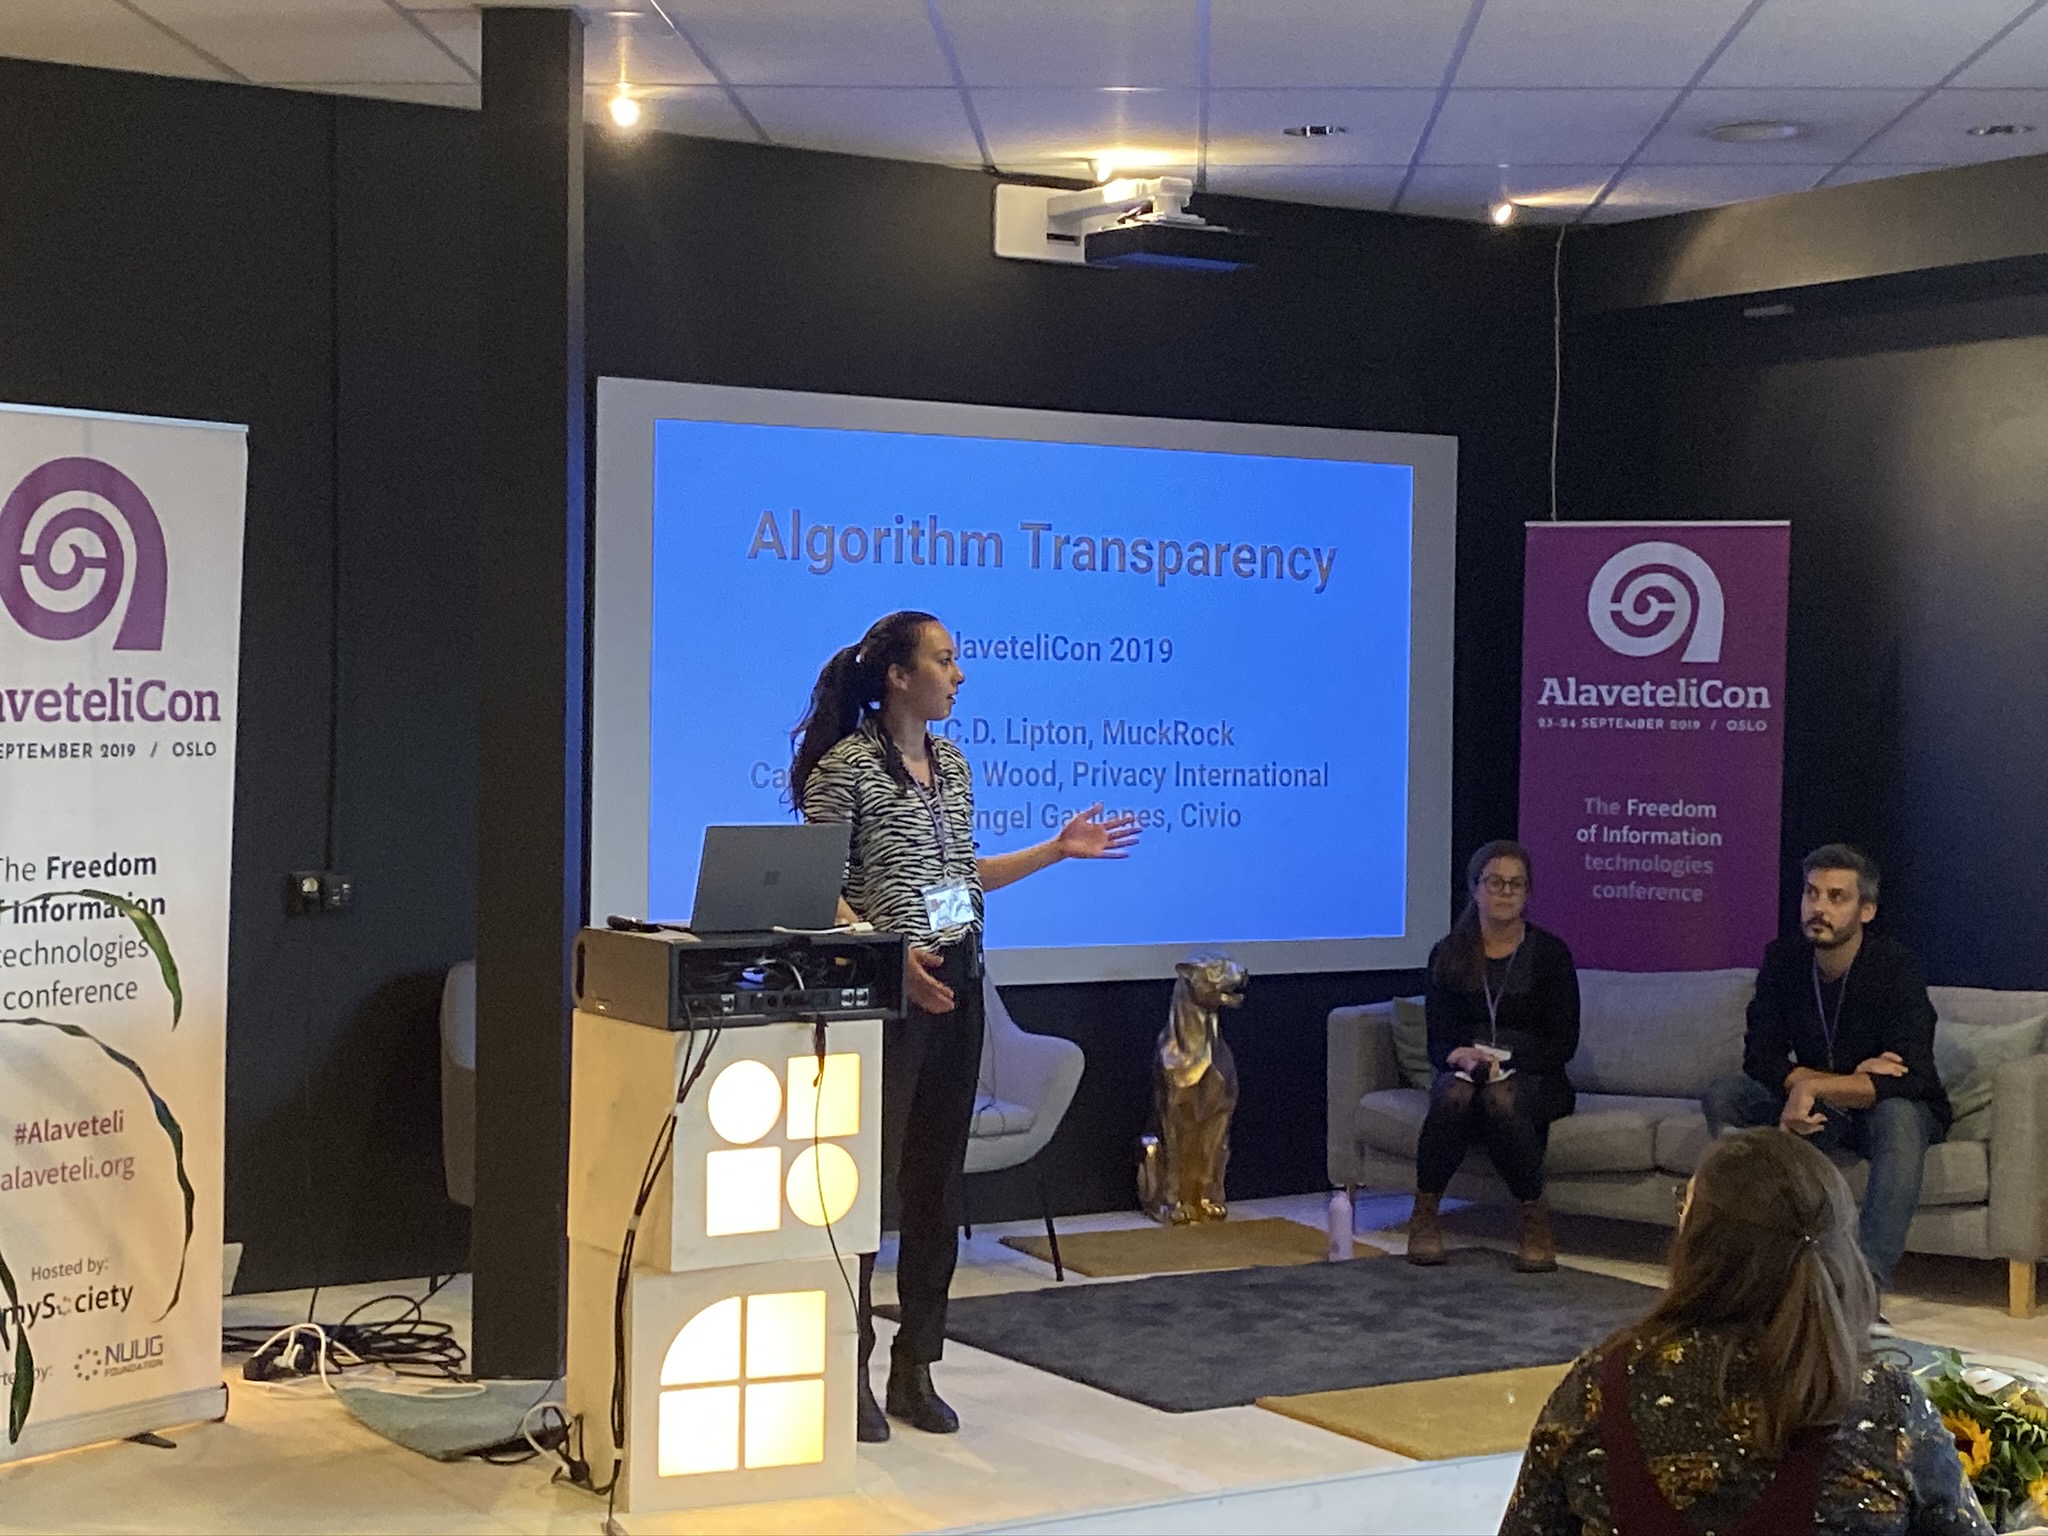 Beryl Lipton doing a presentation on algorithmic transparency at AlaveteliCon